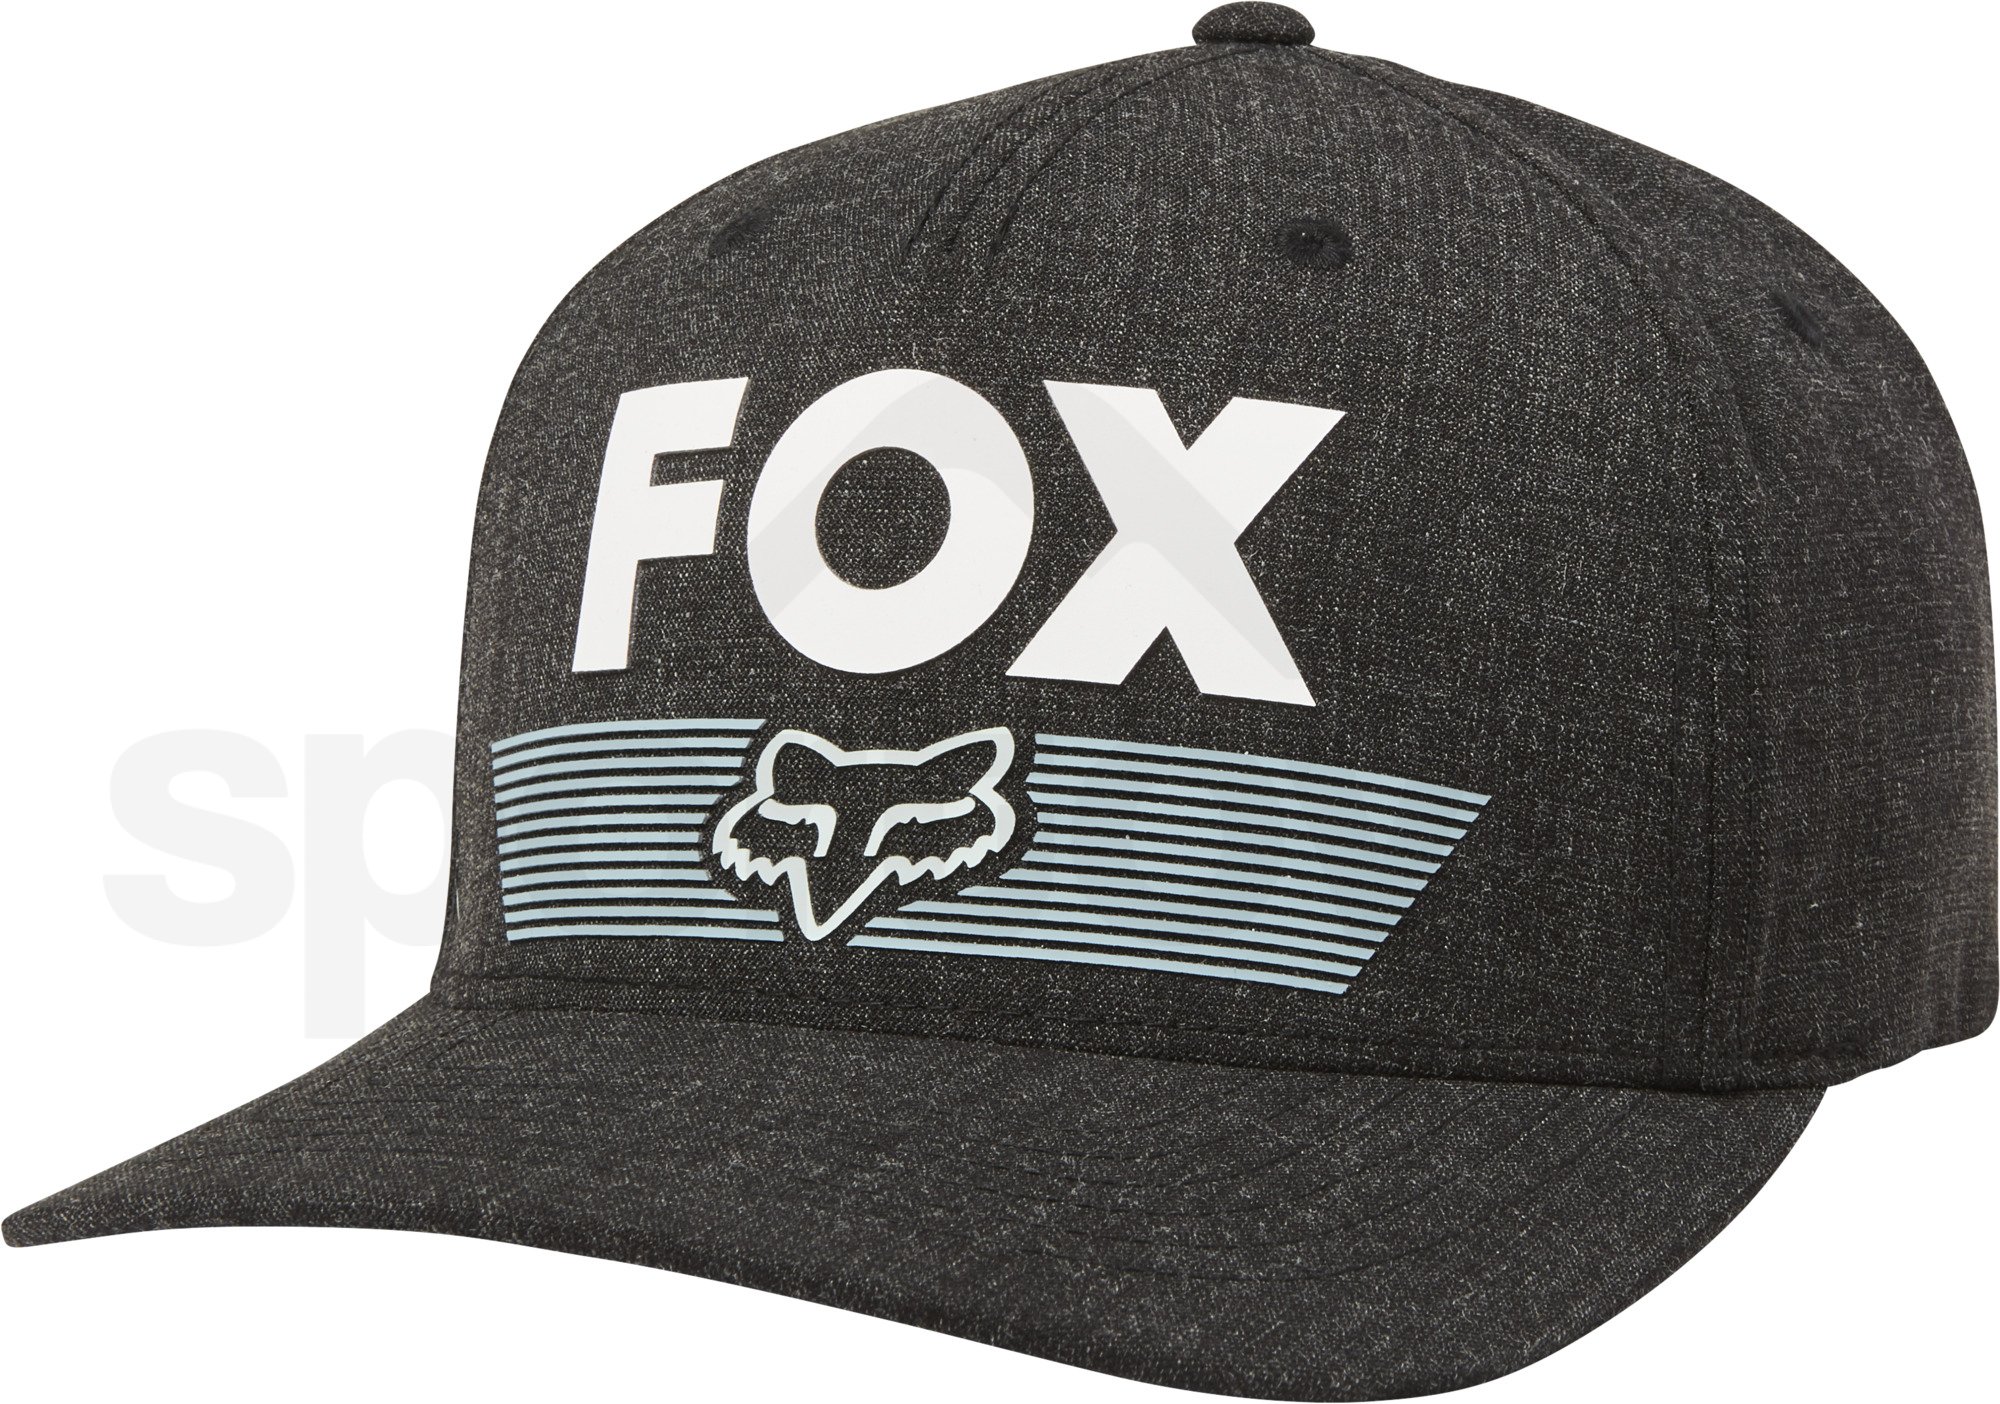 Čepice Fox Racing Aviator Flexfit Hat - černá